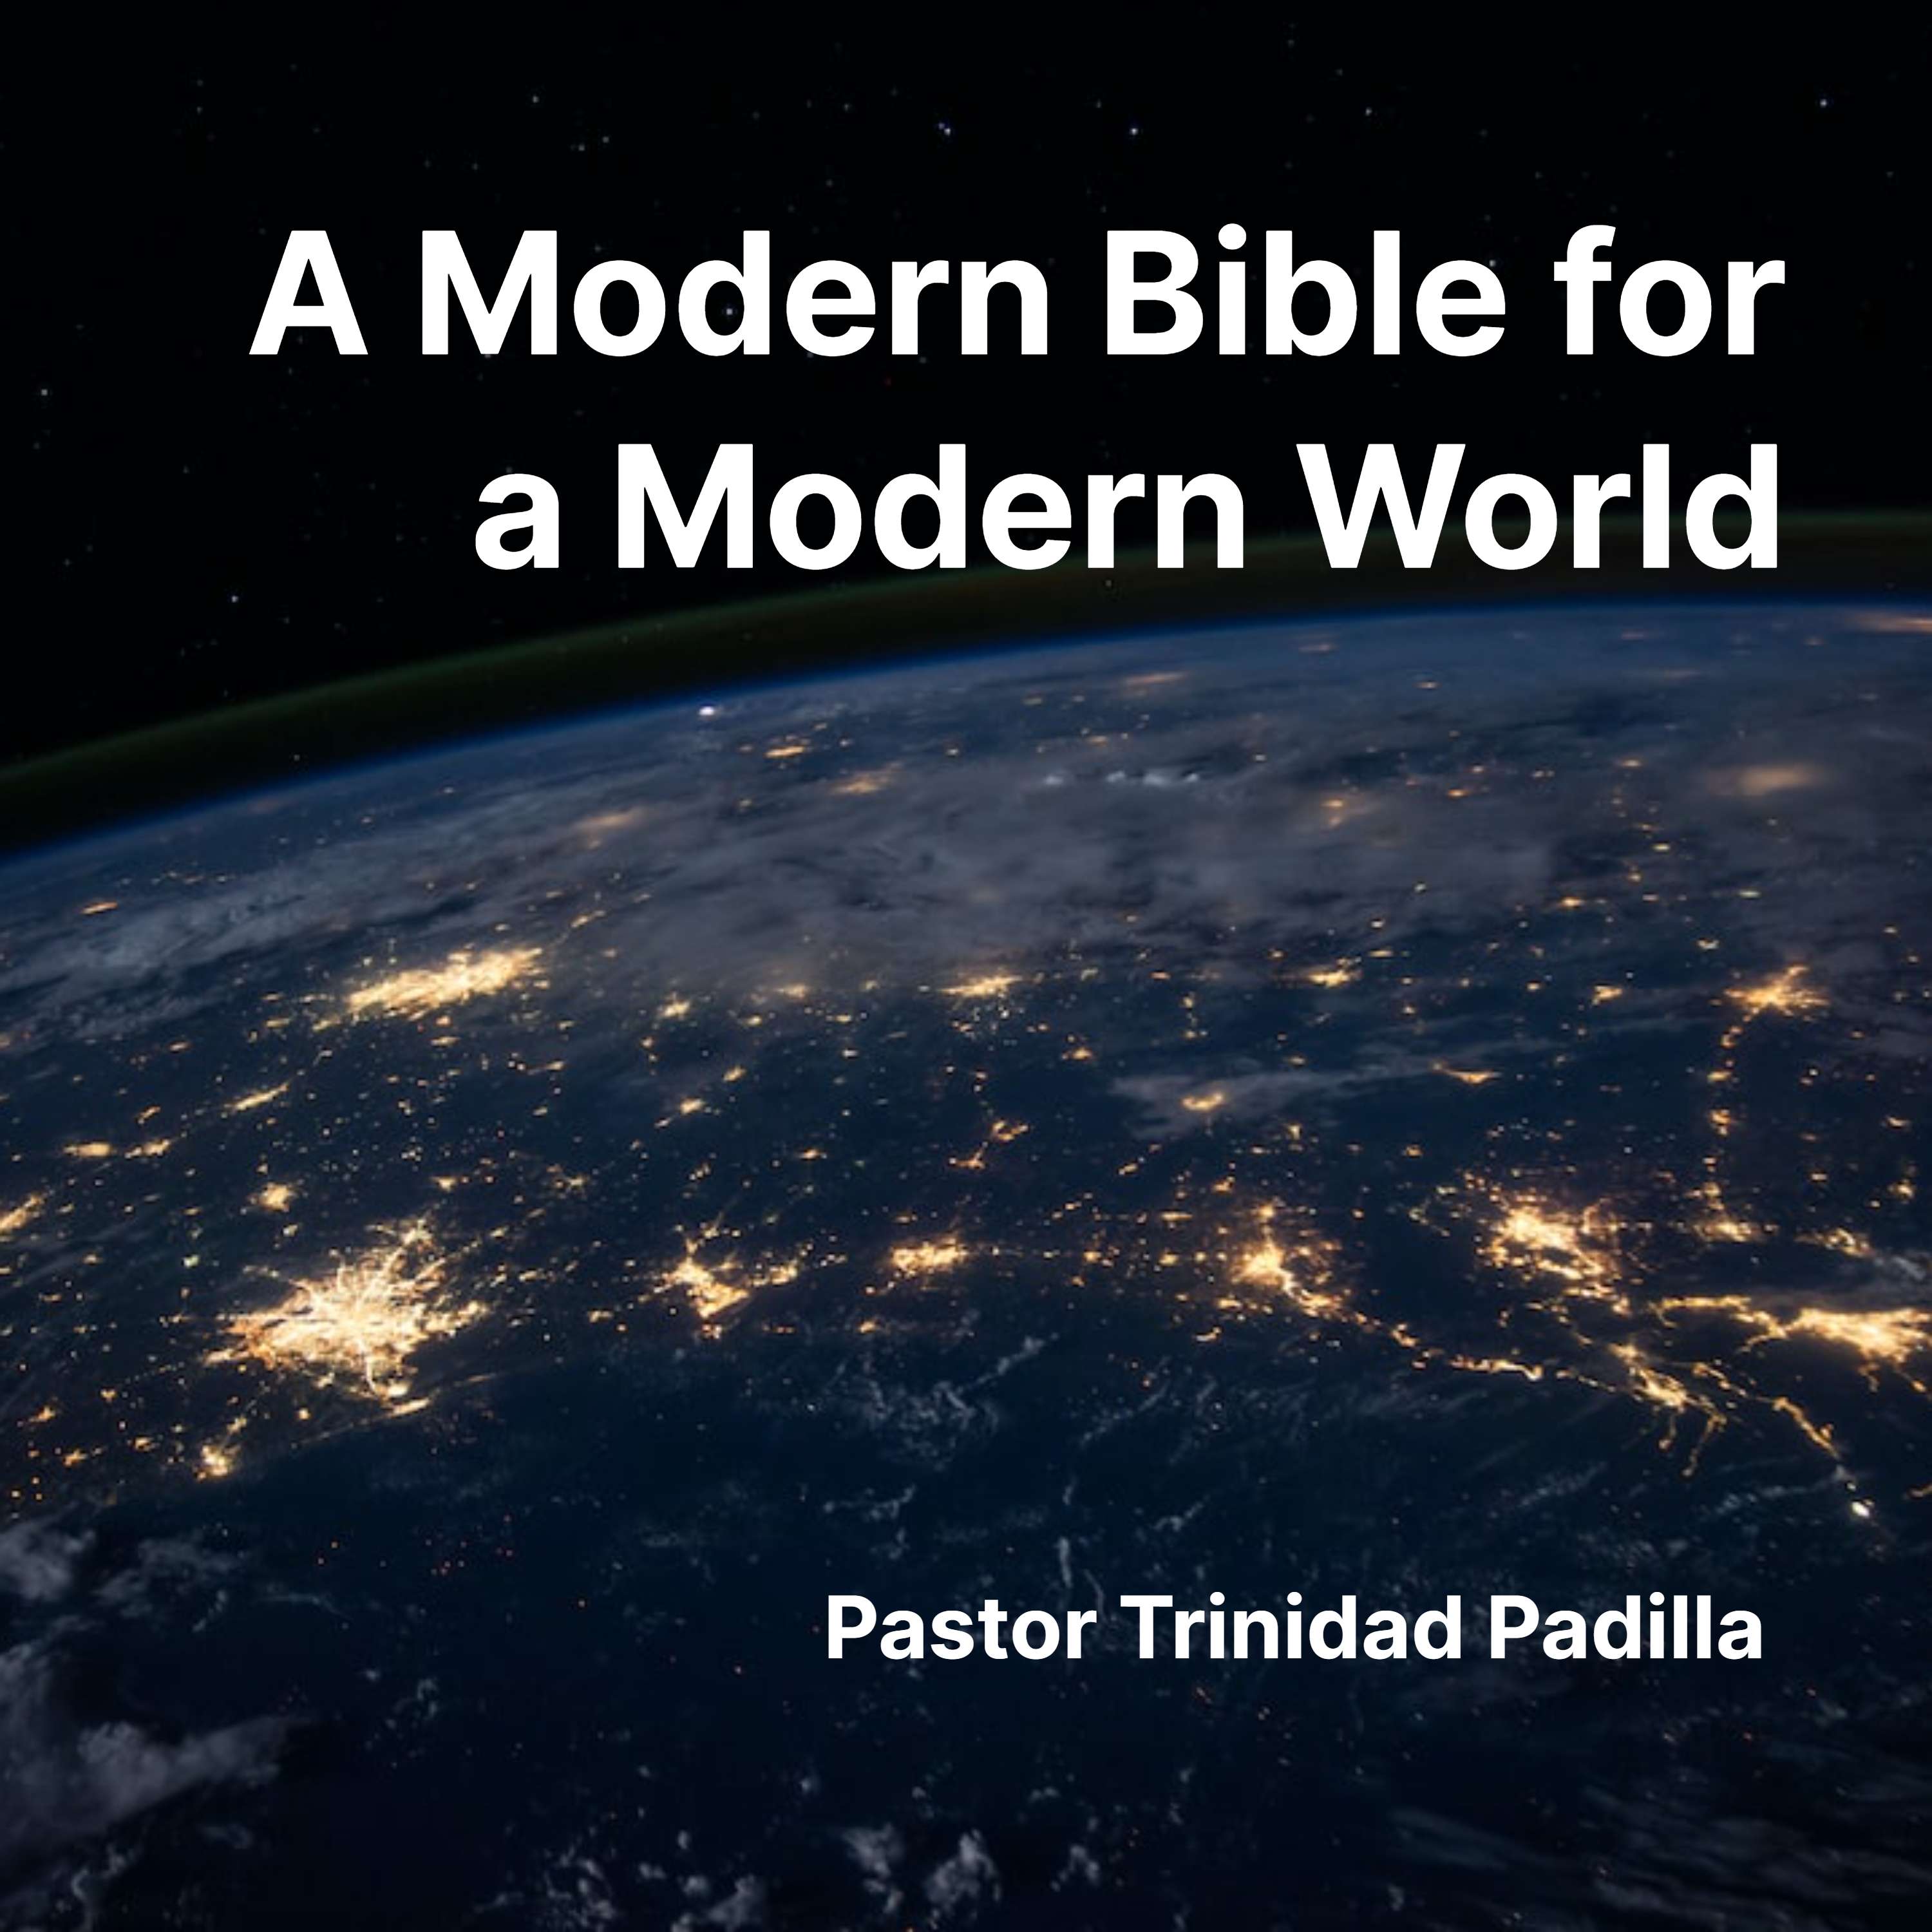 A Modern Bible for a Modern World - Trinidad Padilla